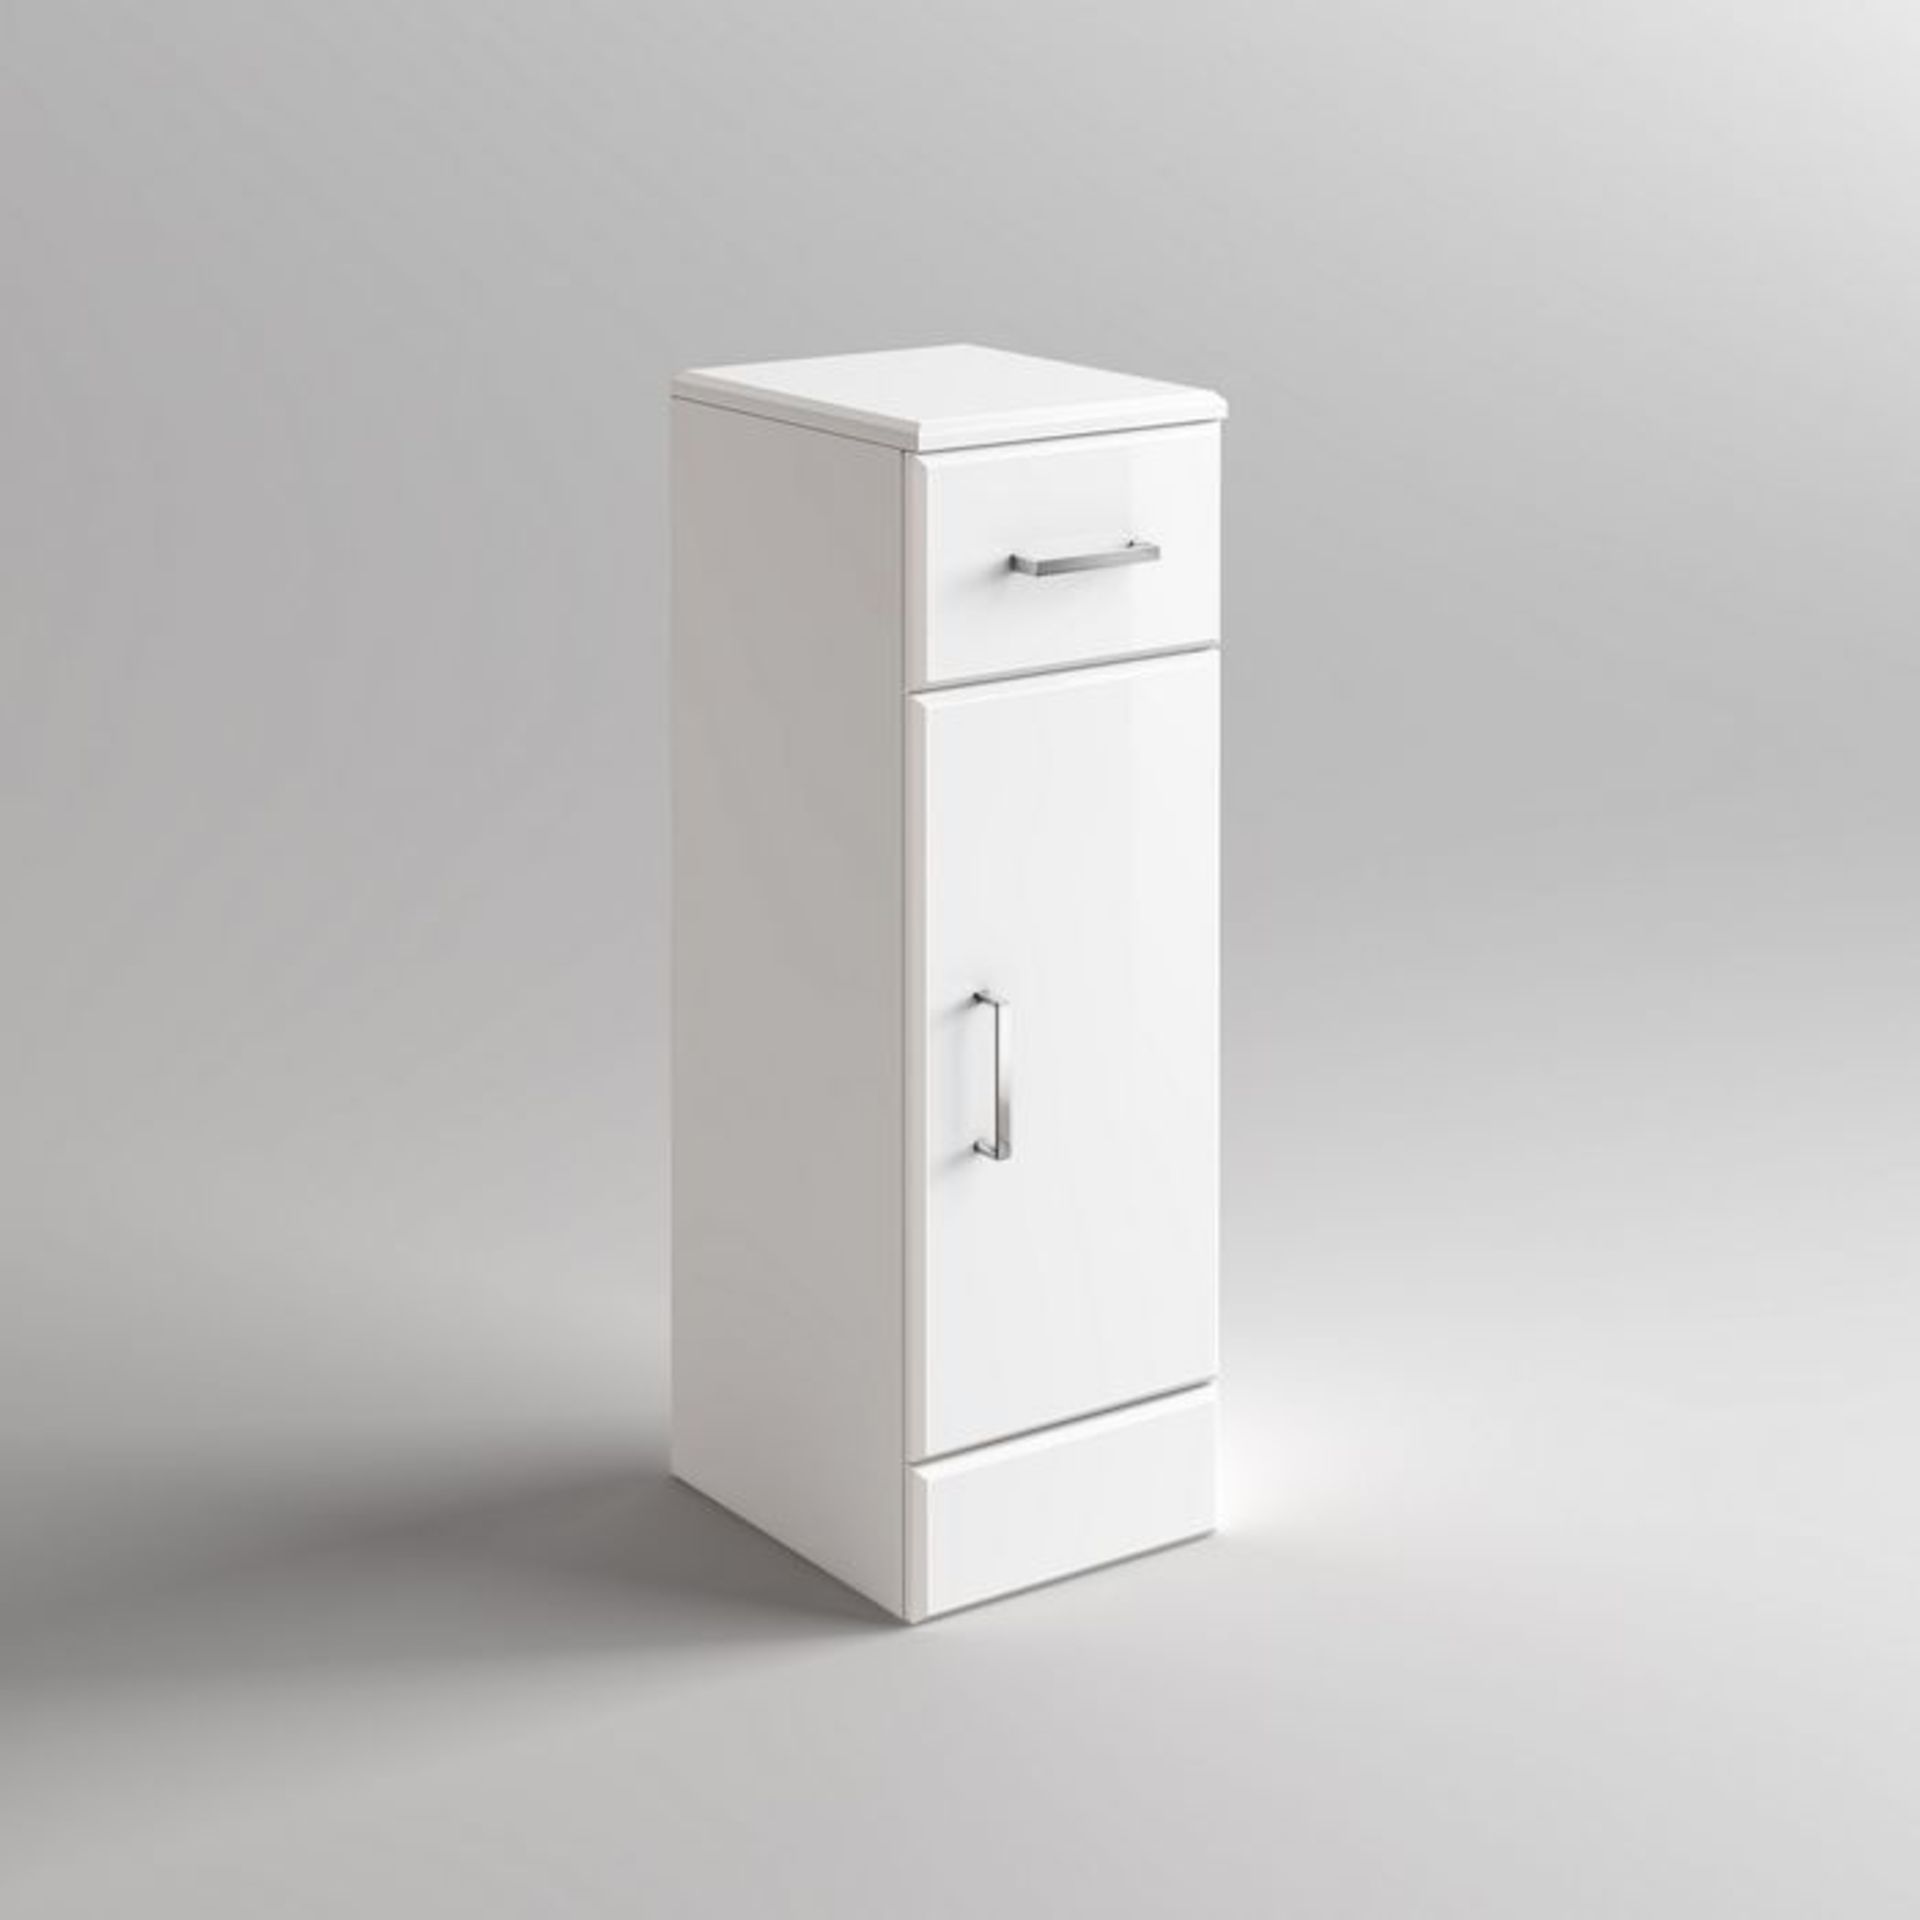 (T105) 250x300mm Quartz Gloss White Small Side Cabinet Unit. RRP £143.99.Pristine gloss white - Image 5 of 5